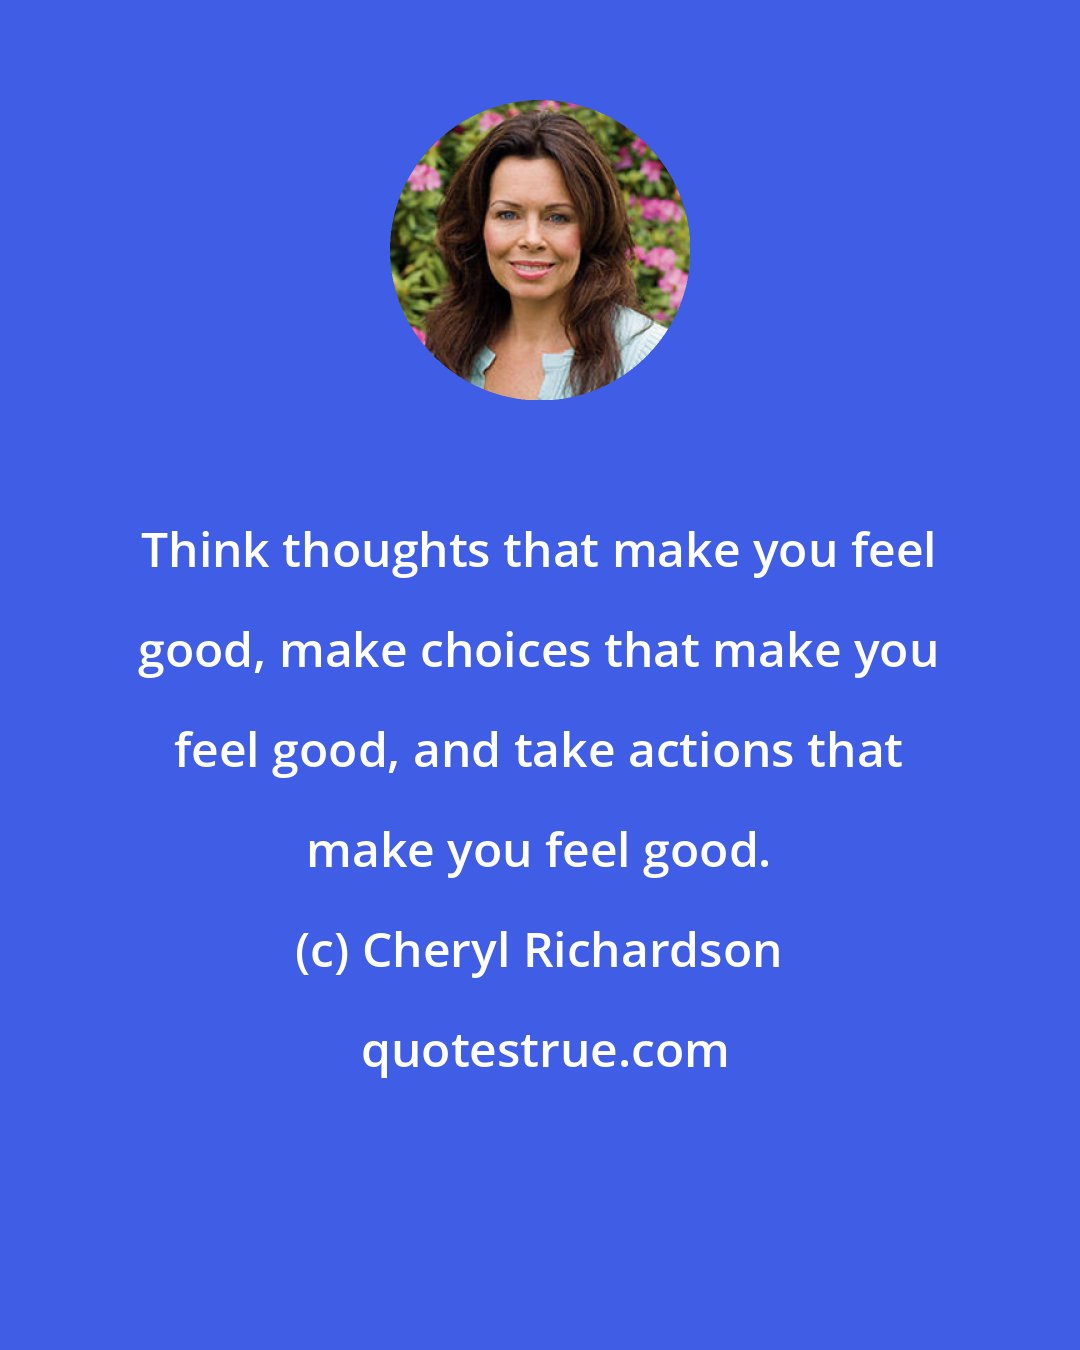 Cheryl Richardson: Think thoughts that make you feel good, make choices that make you feel good, and take actions that make you feel good.